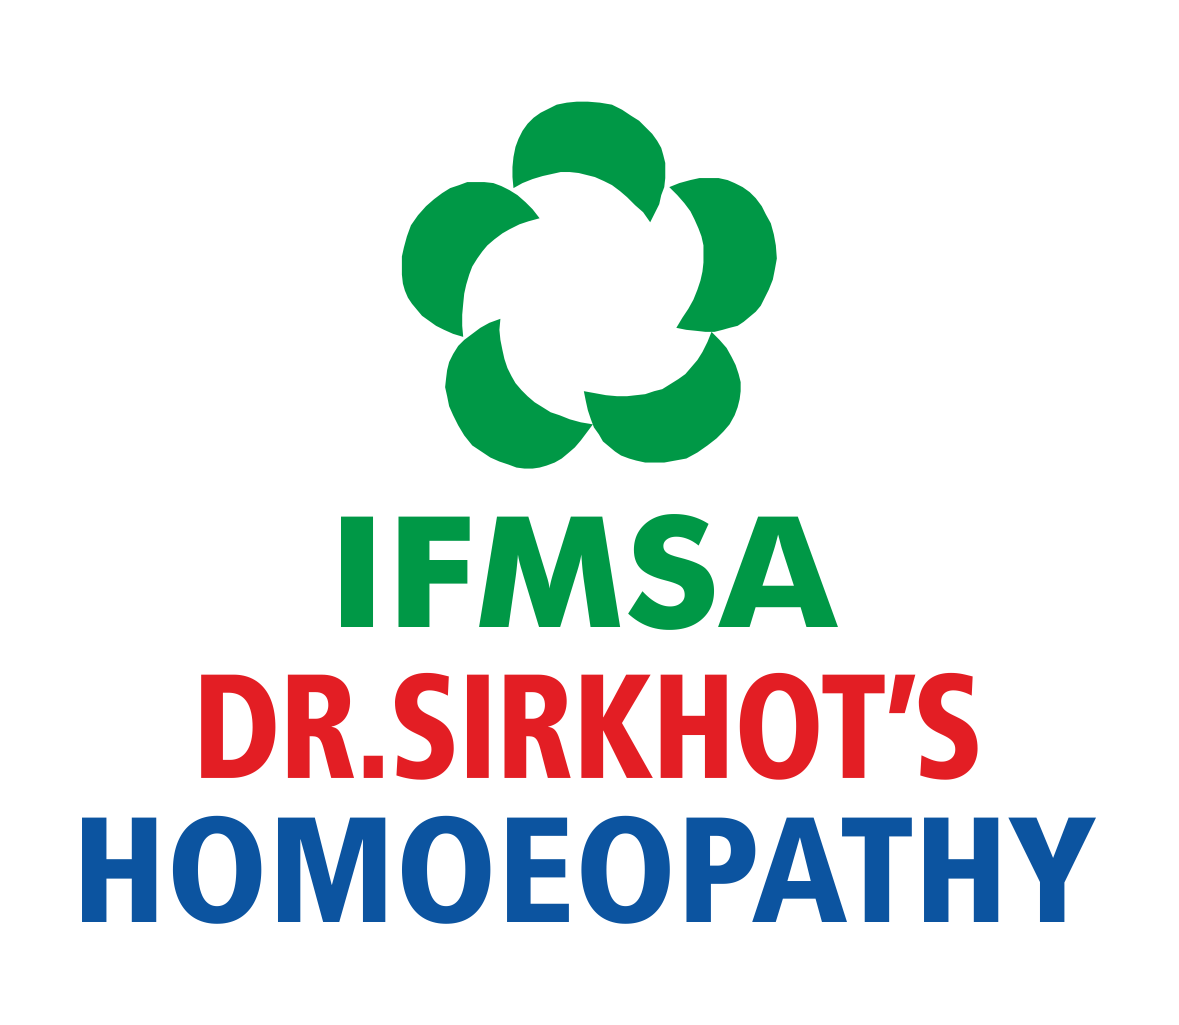 Free Homeopathy Logo Creator | Best Homeopathy Logos | LogoDesign.net